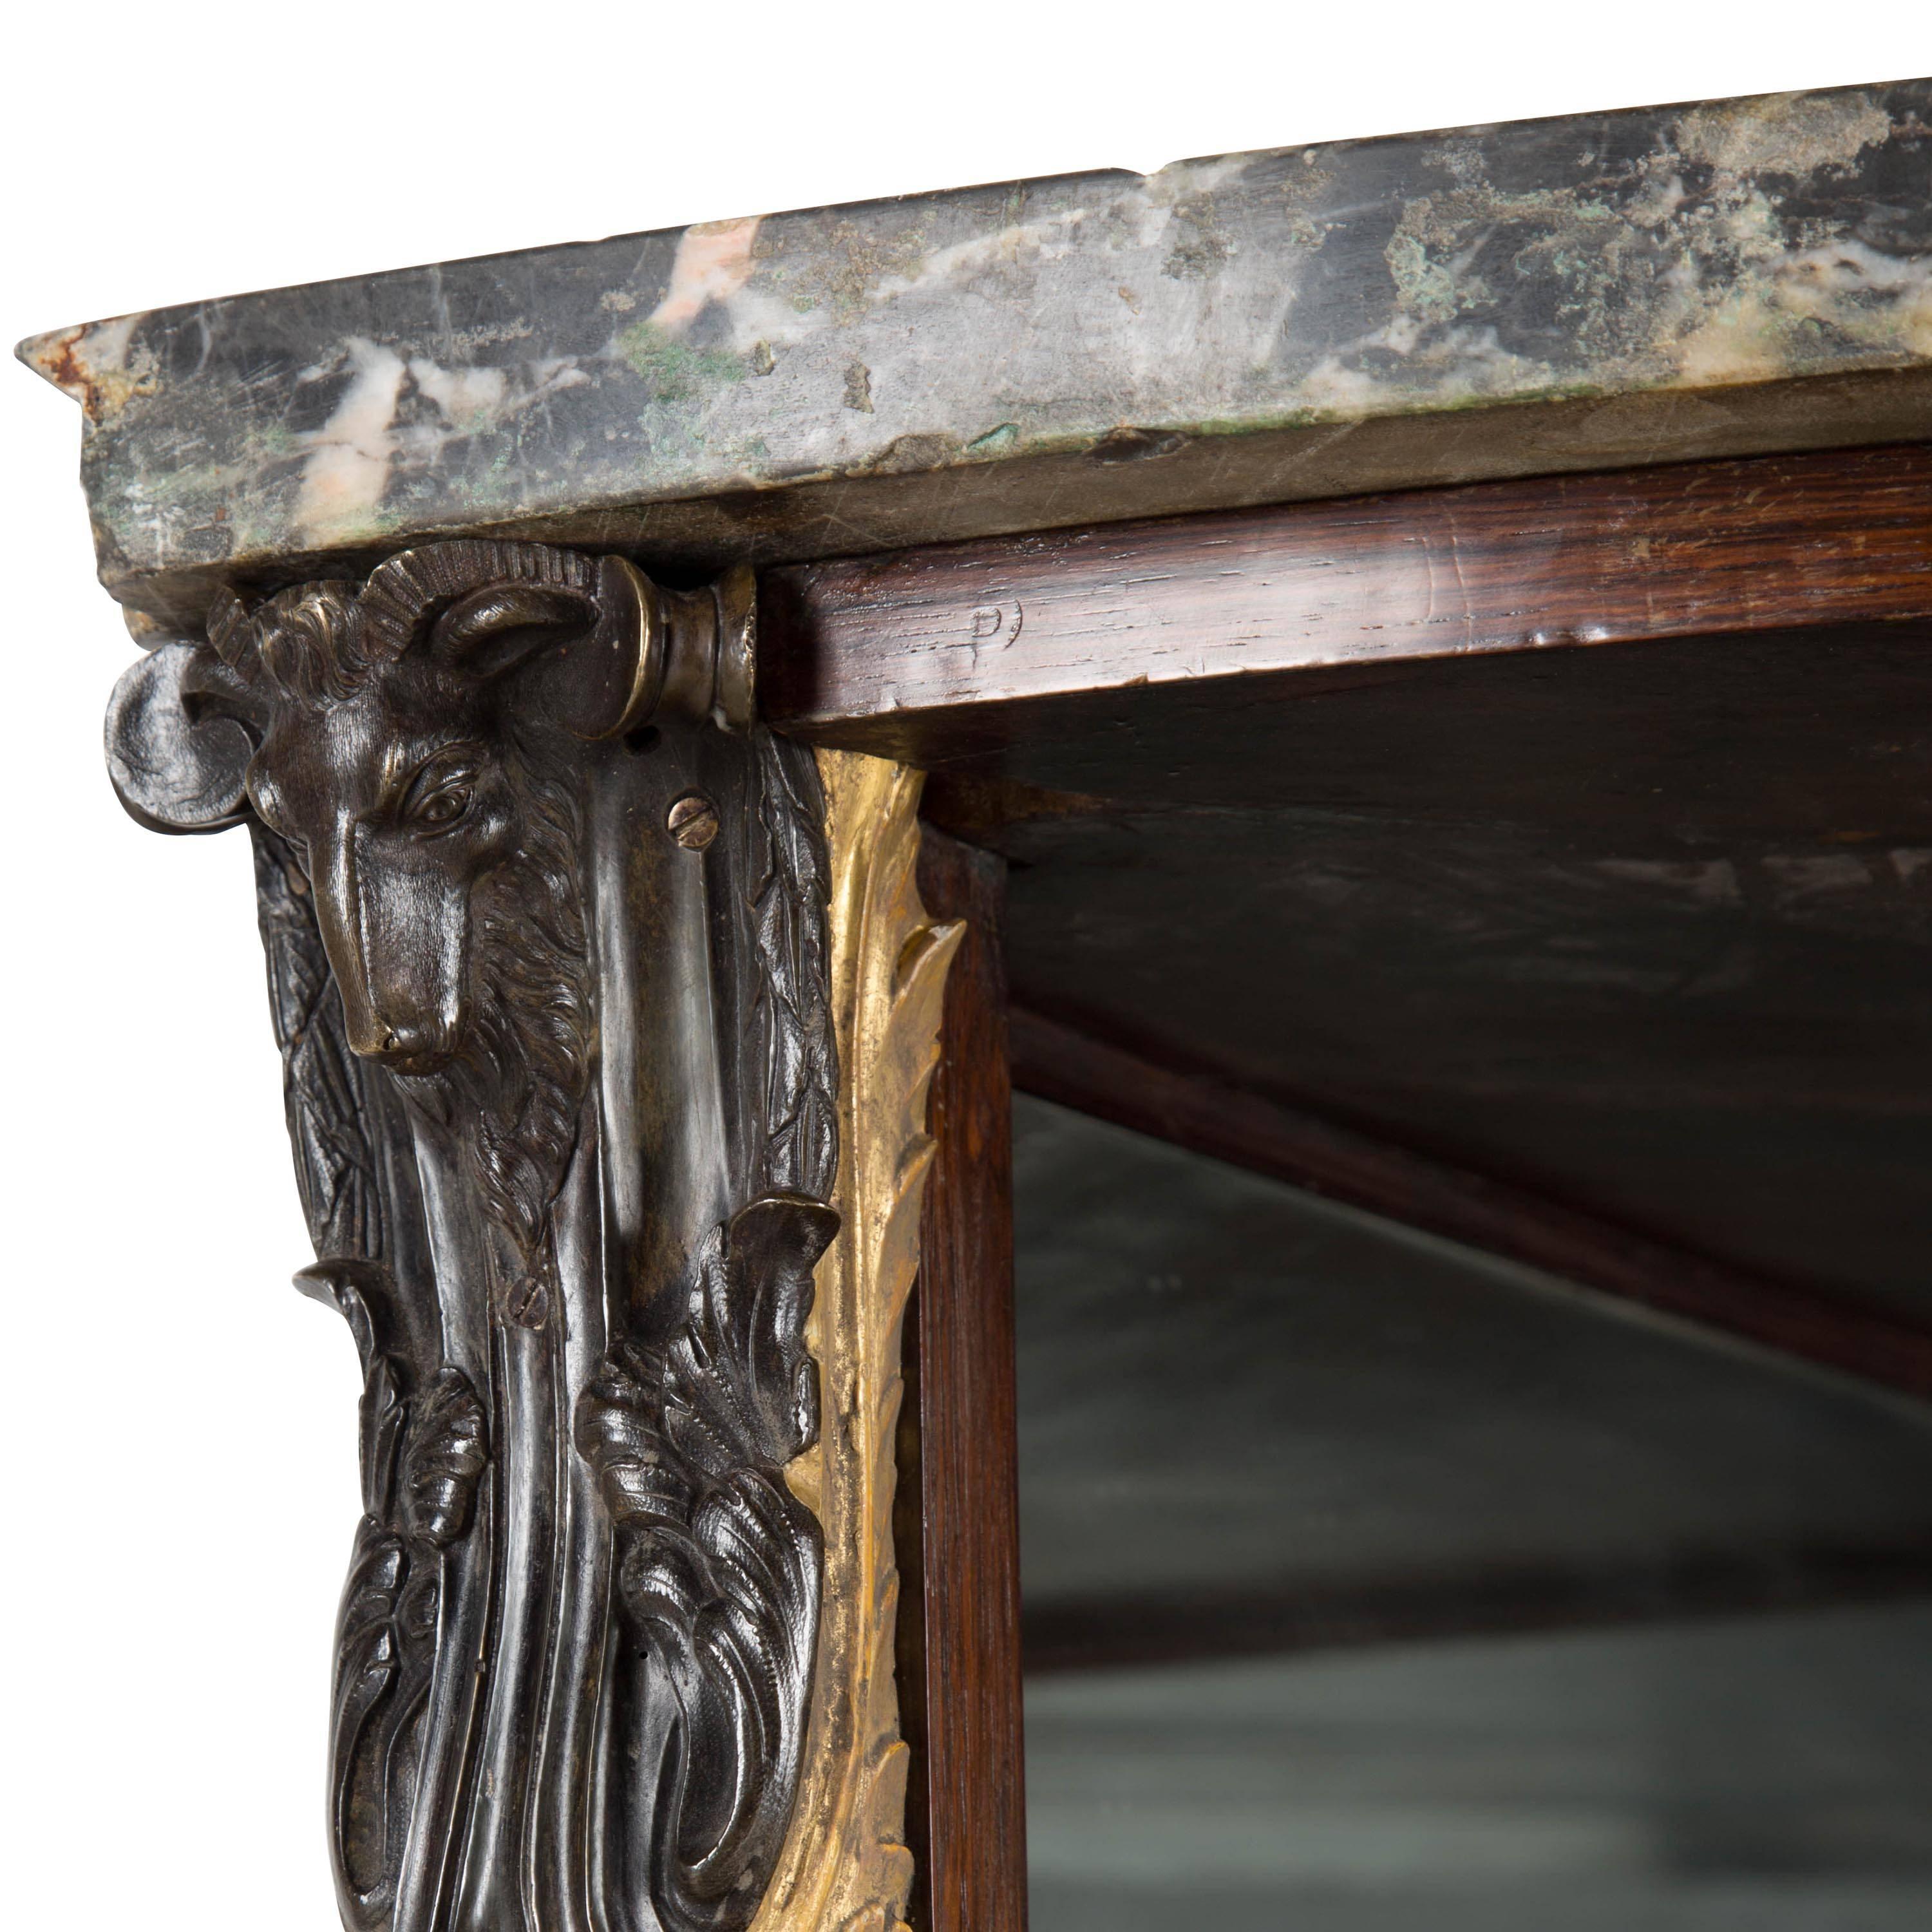 Superb pair of Irish rosewood mirrored corner etageres with original marble tops, bronze and gilded bronze embellishments, circa 1830.